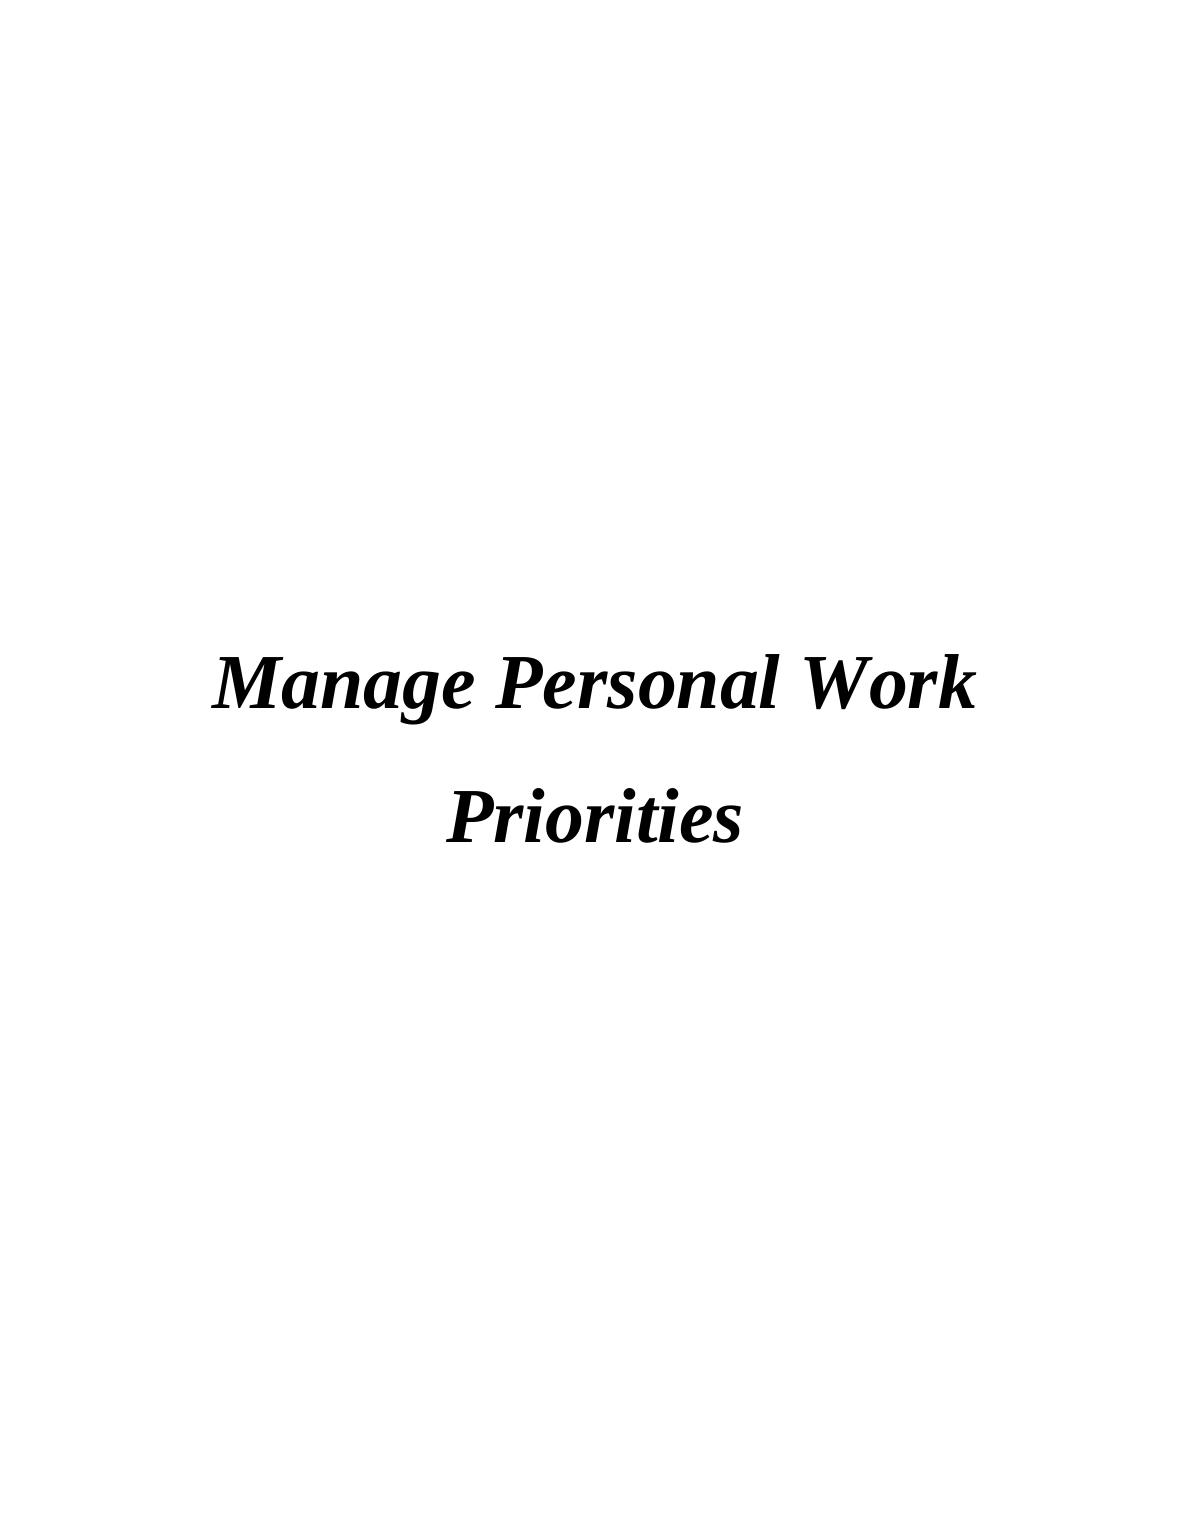 BSBWOR501 Manage Personal Work Priorities Professional Development_1